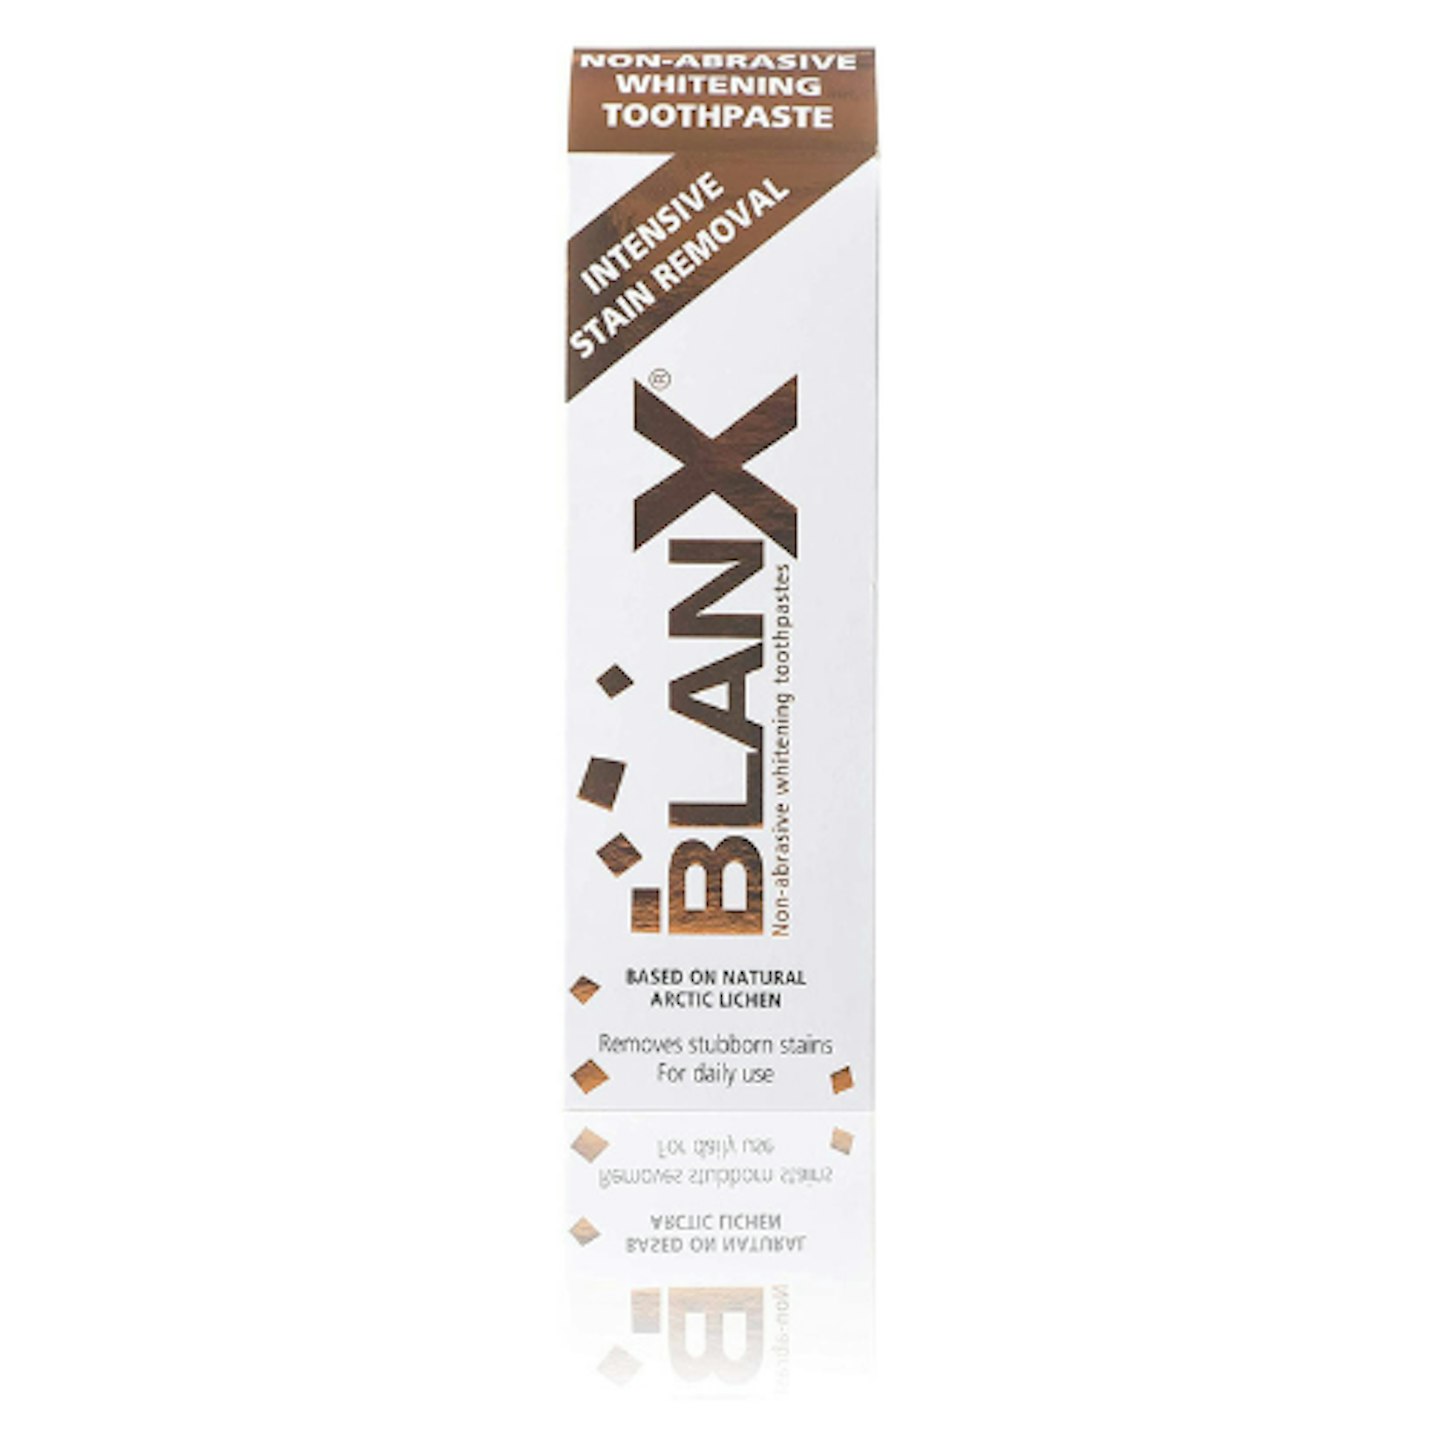 BlanX toothpaste on white background